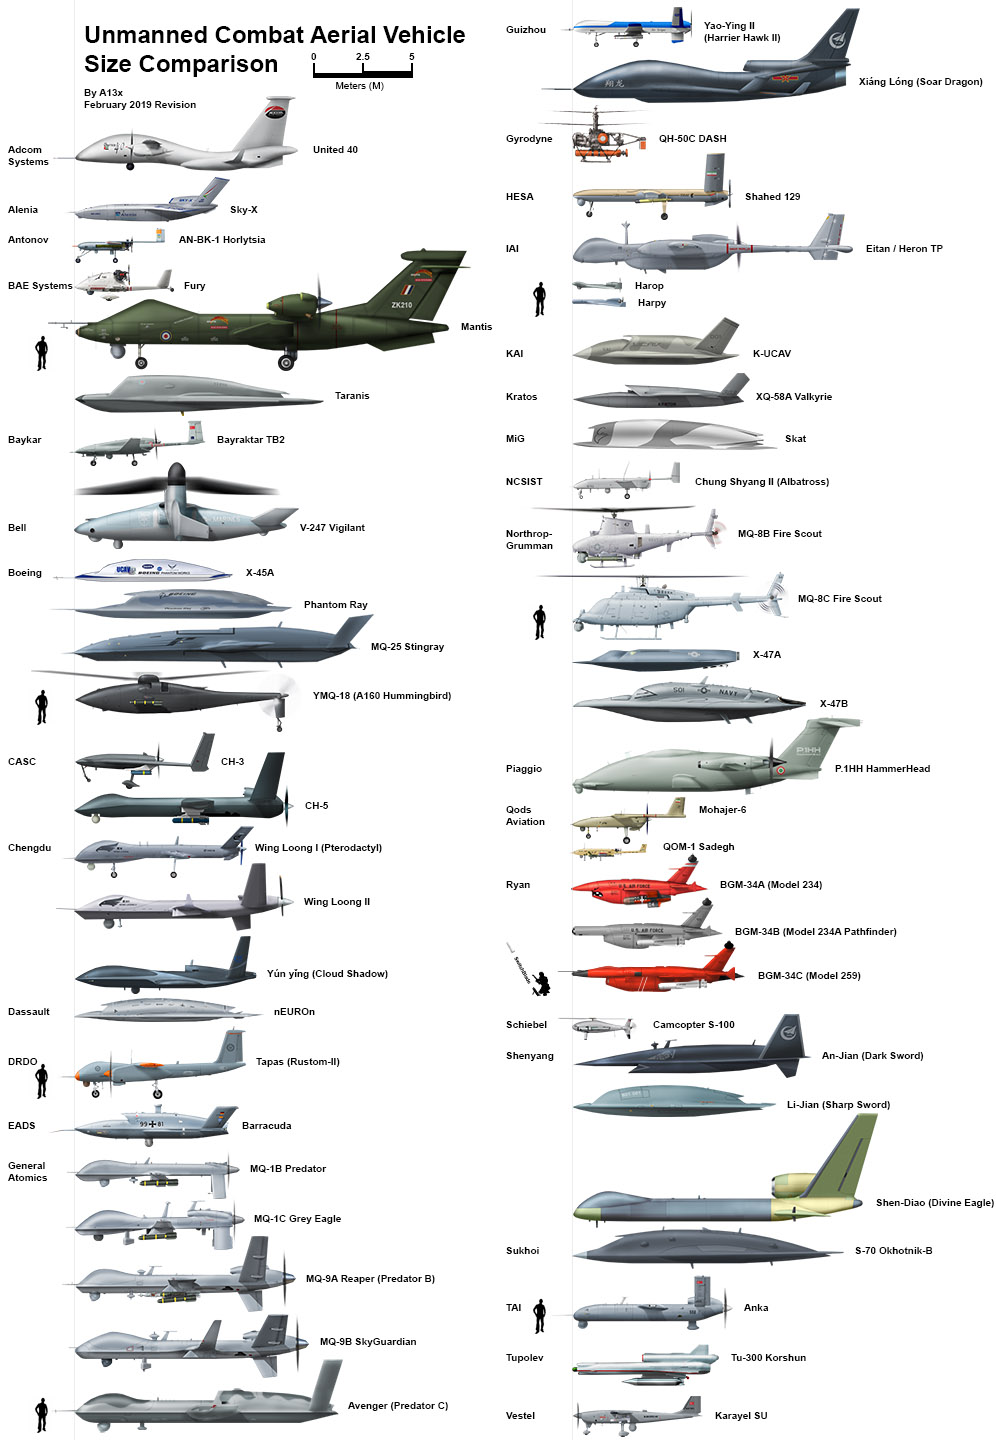 Commercial Aircraft Comparison Chart